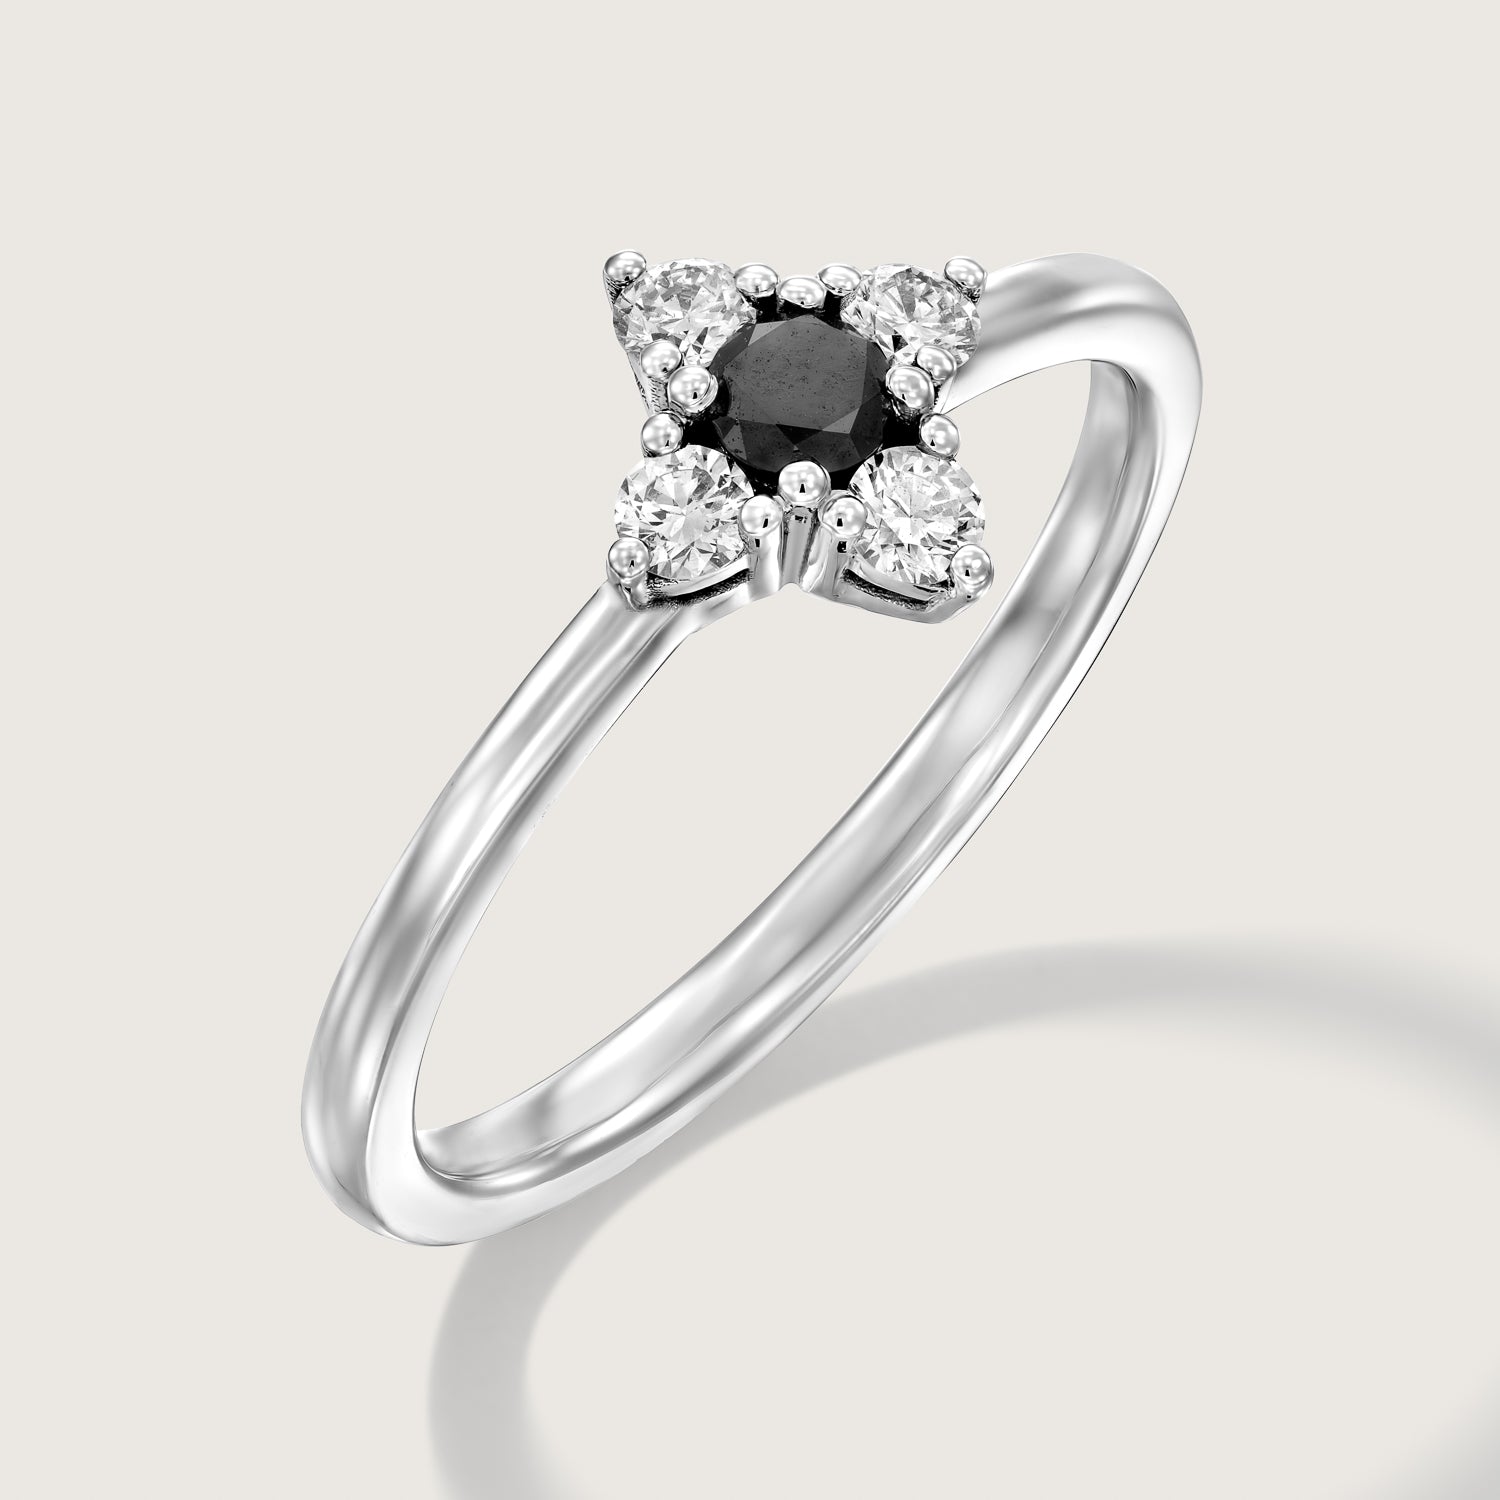 Eliana Gold Ring with Black & White Diamonds